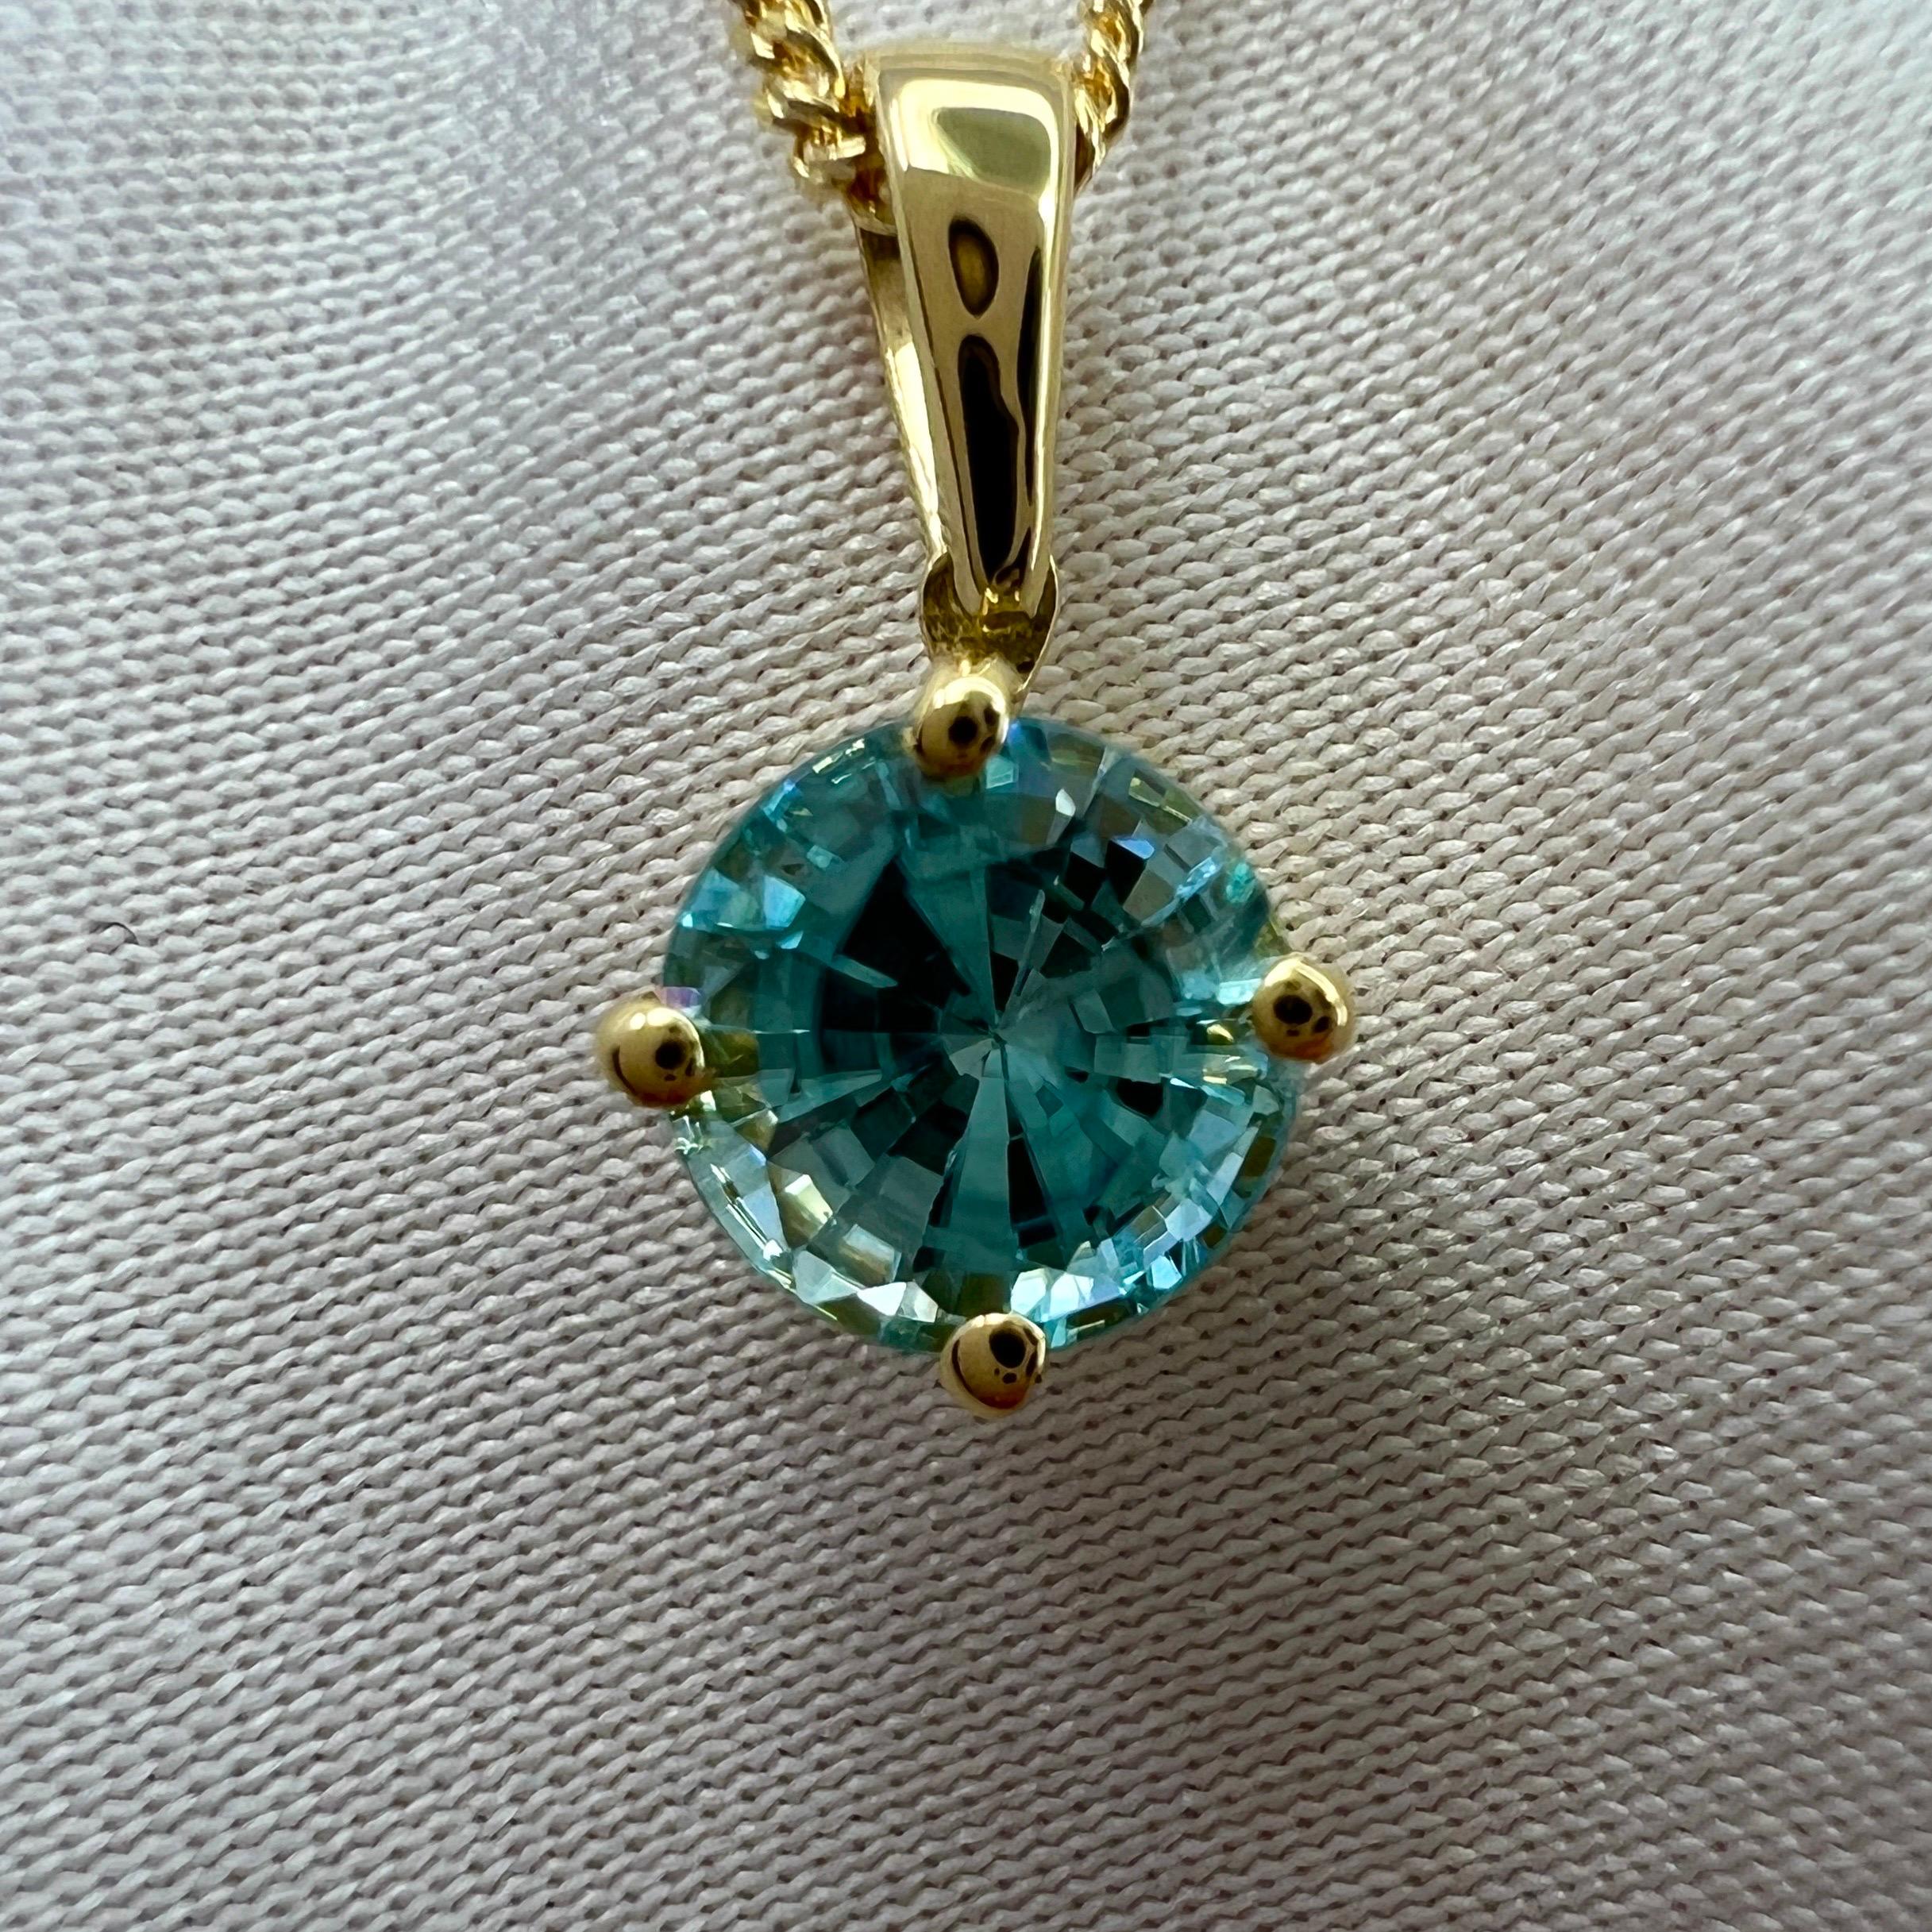 Collier pendentif en or jaune 18 carats avec zircon bleu fluo de 1,20 carat, taille ronde Unisexe en vente